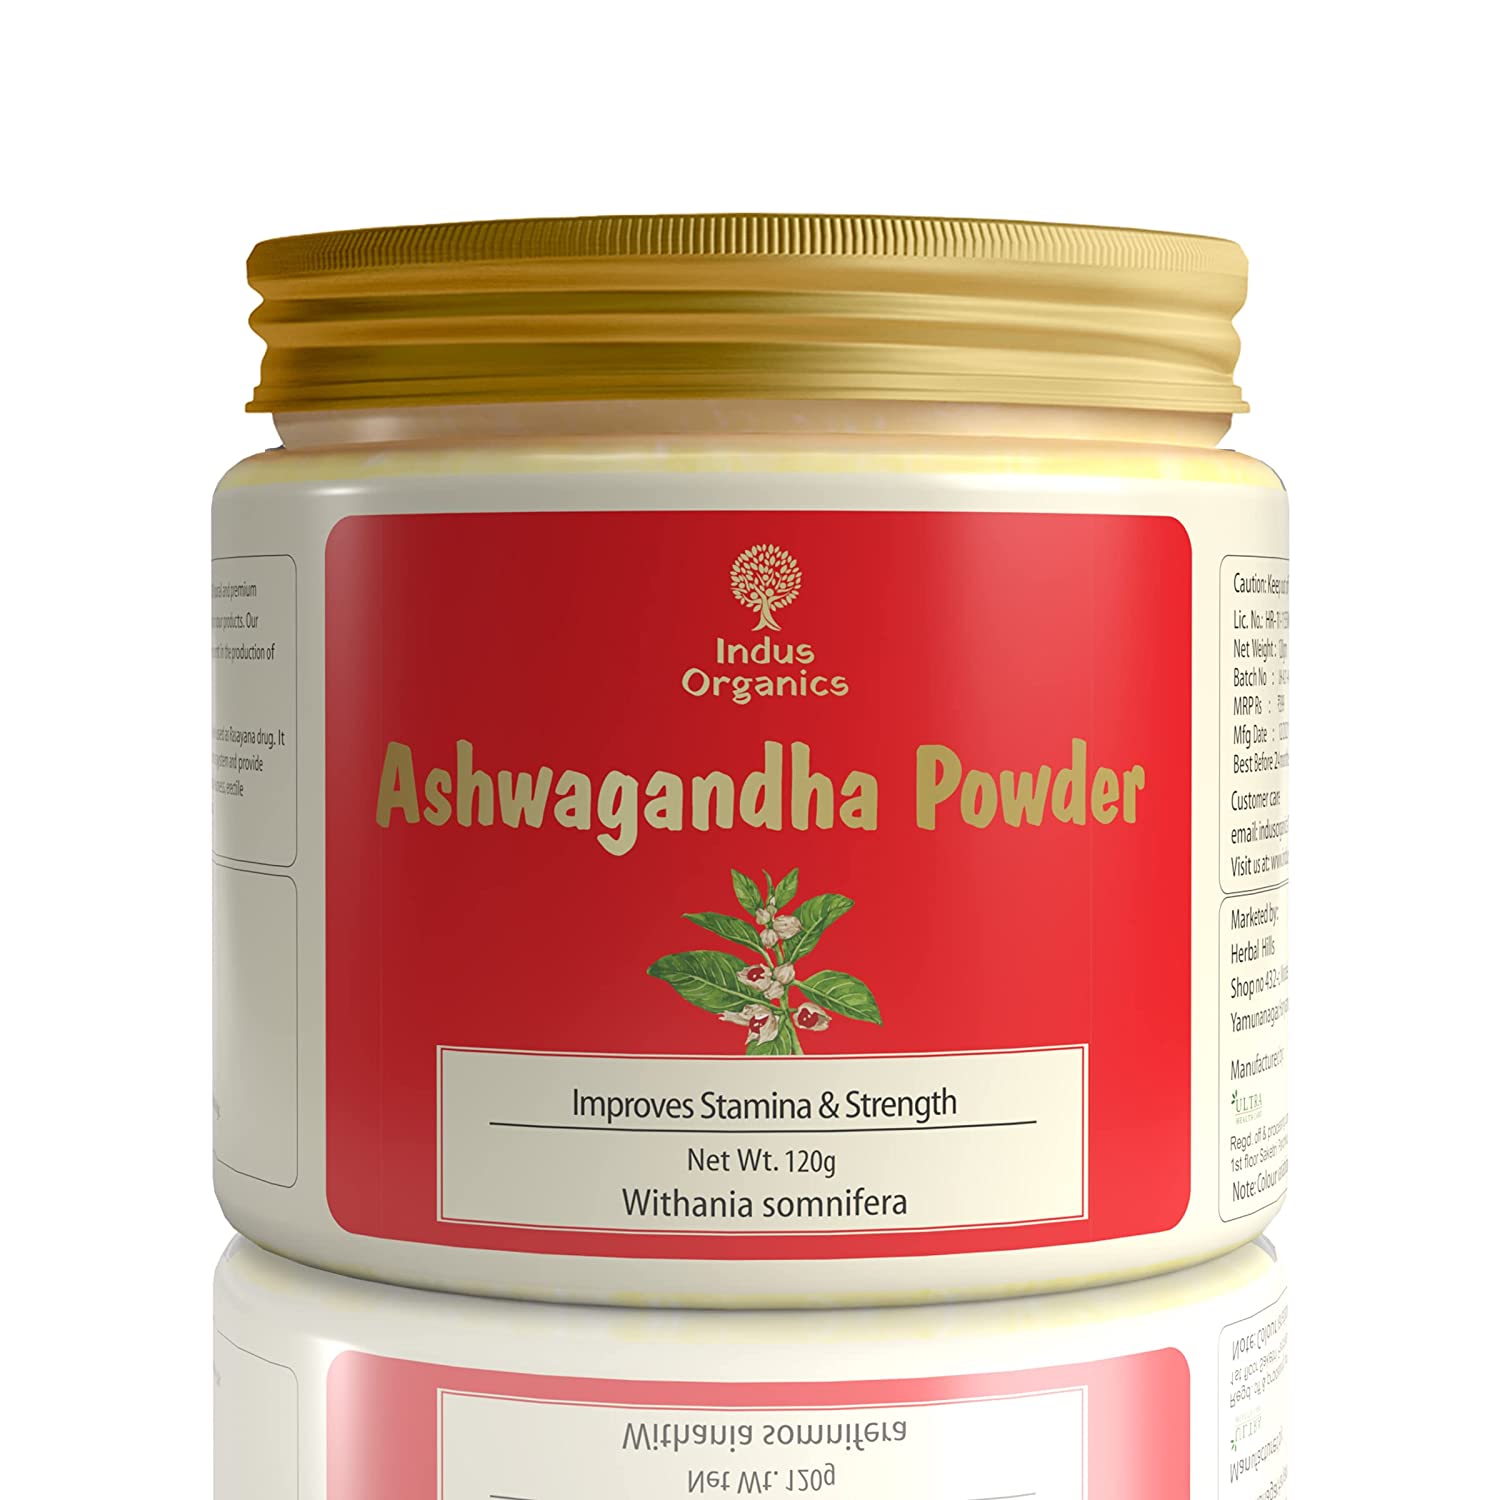 Indus Ashwagandha Ksm-66 Powder: Quality You Can Trust